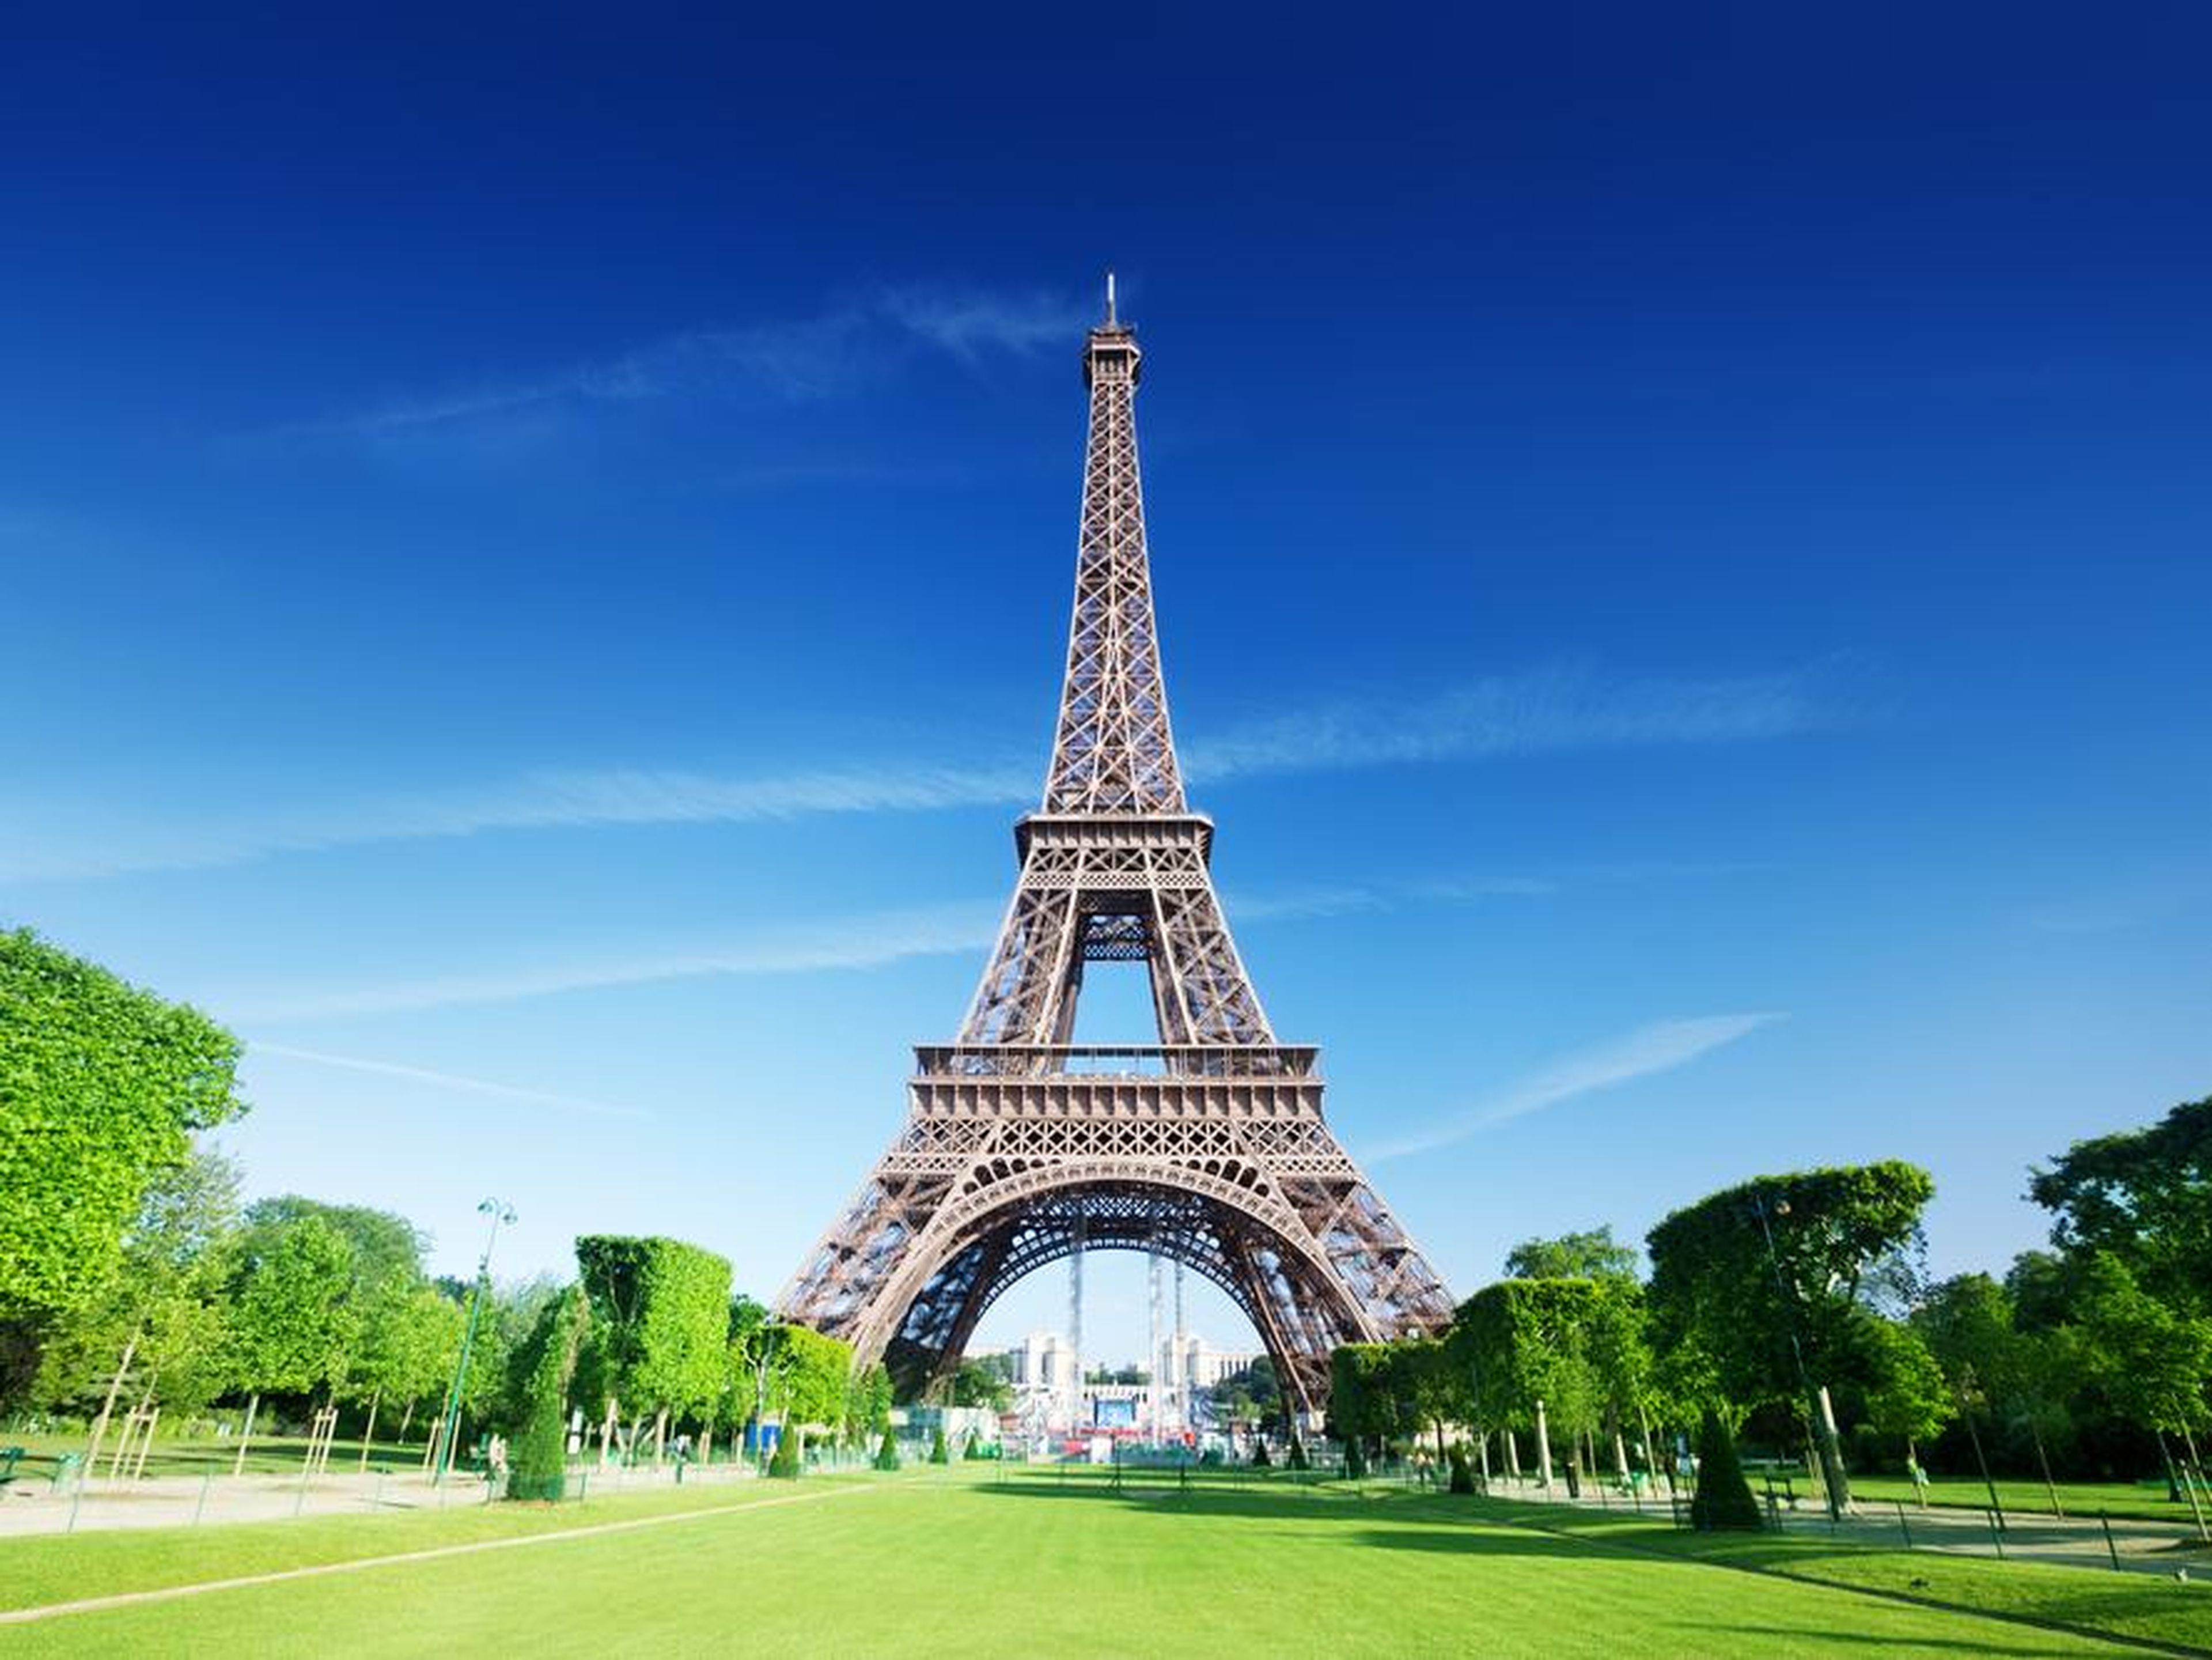 La torre Eiffel en Paris, Francia.